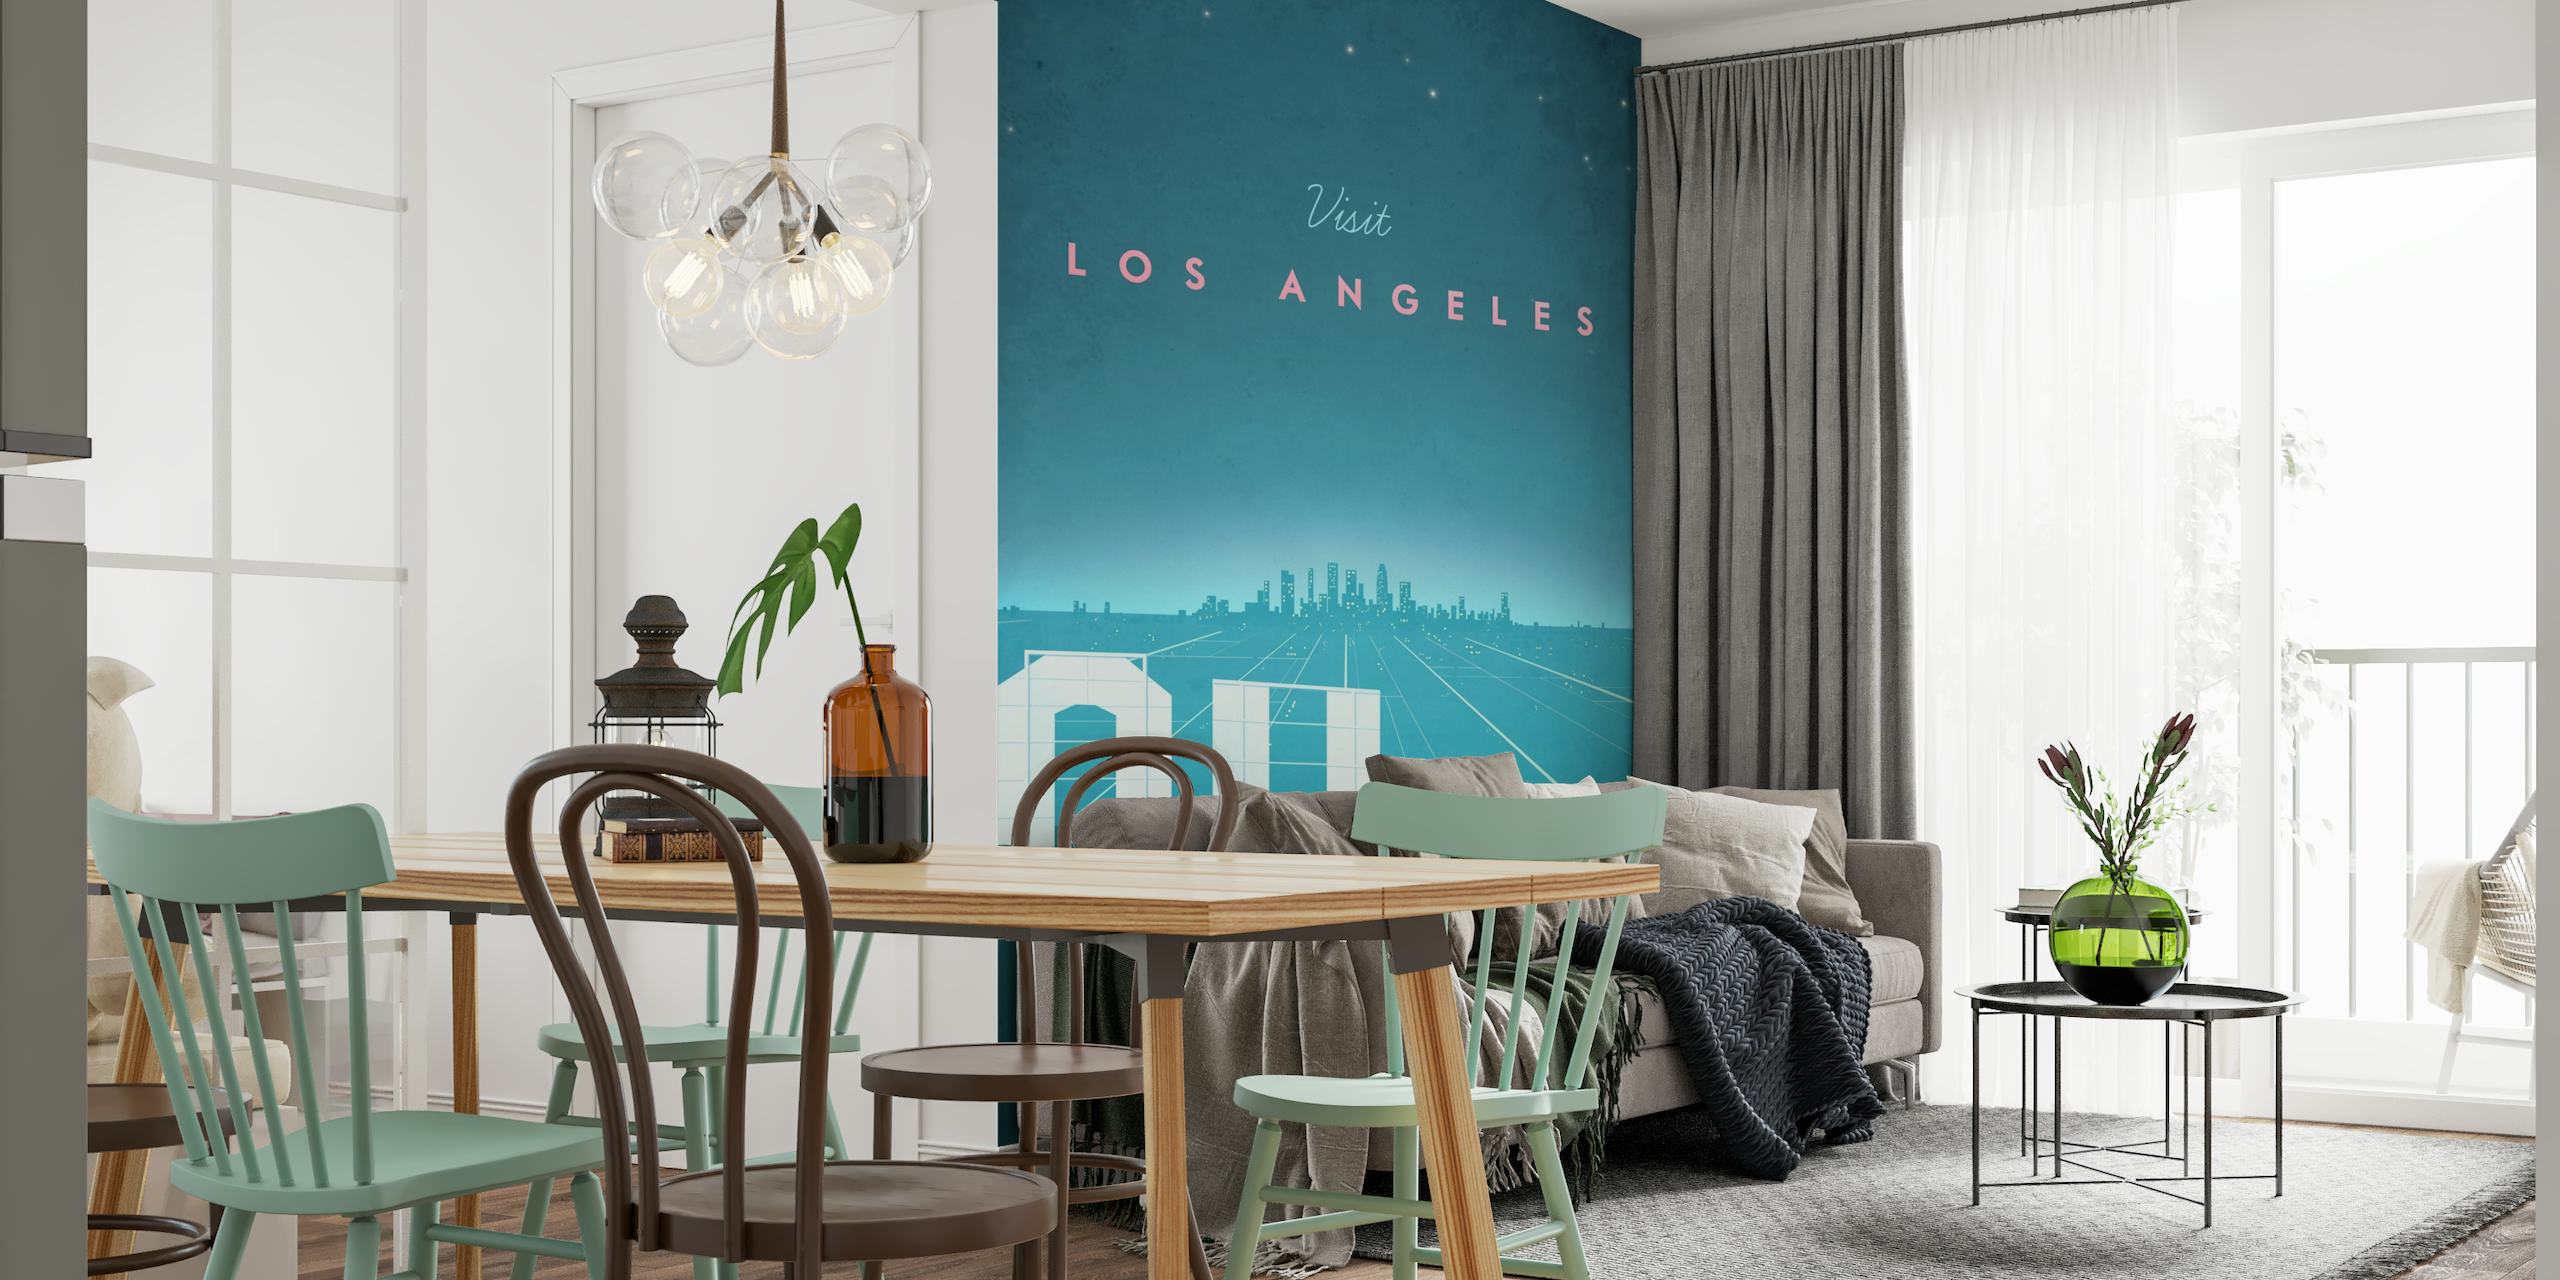 Los Angeles Travel Poster wallpaper